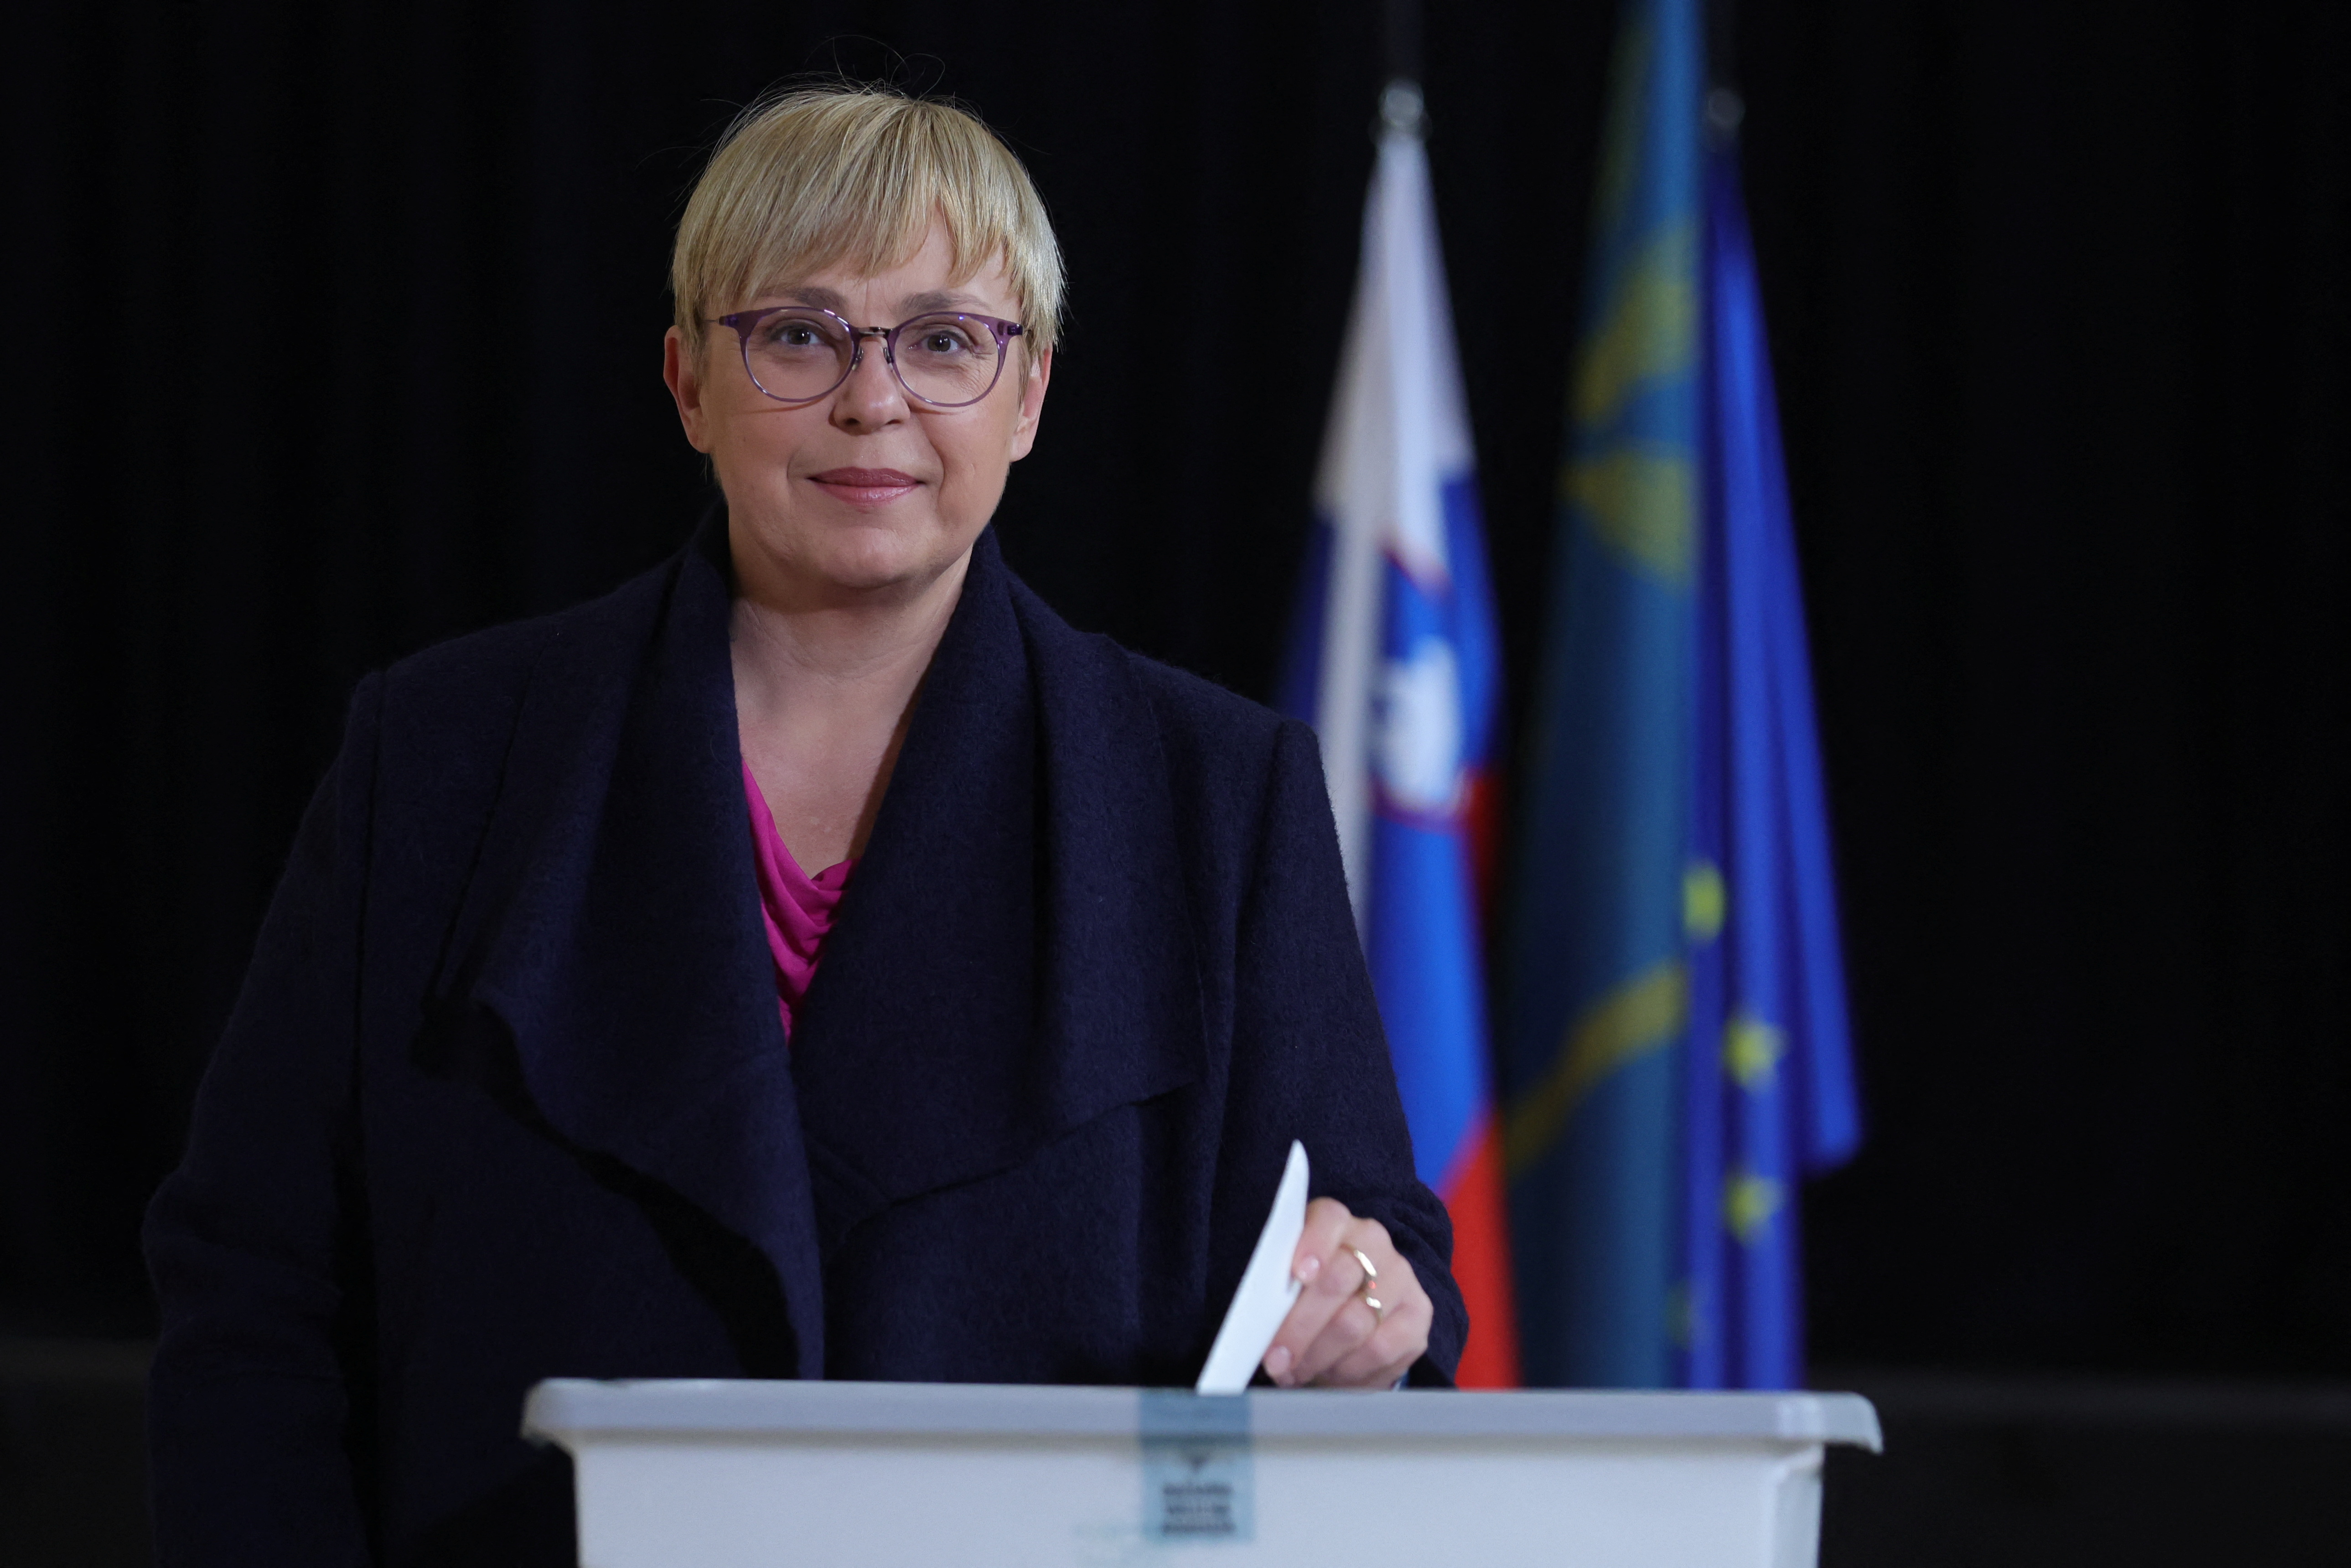 Natasa Pirc Musar wins runoff vote, becomes Slovenia's first woman